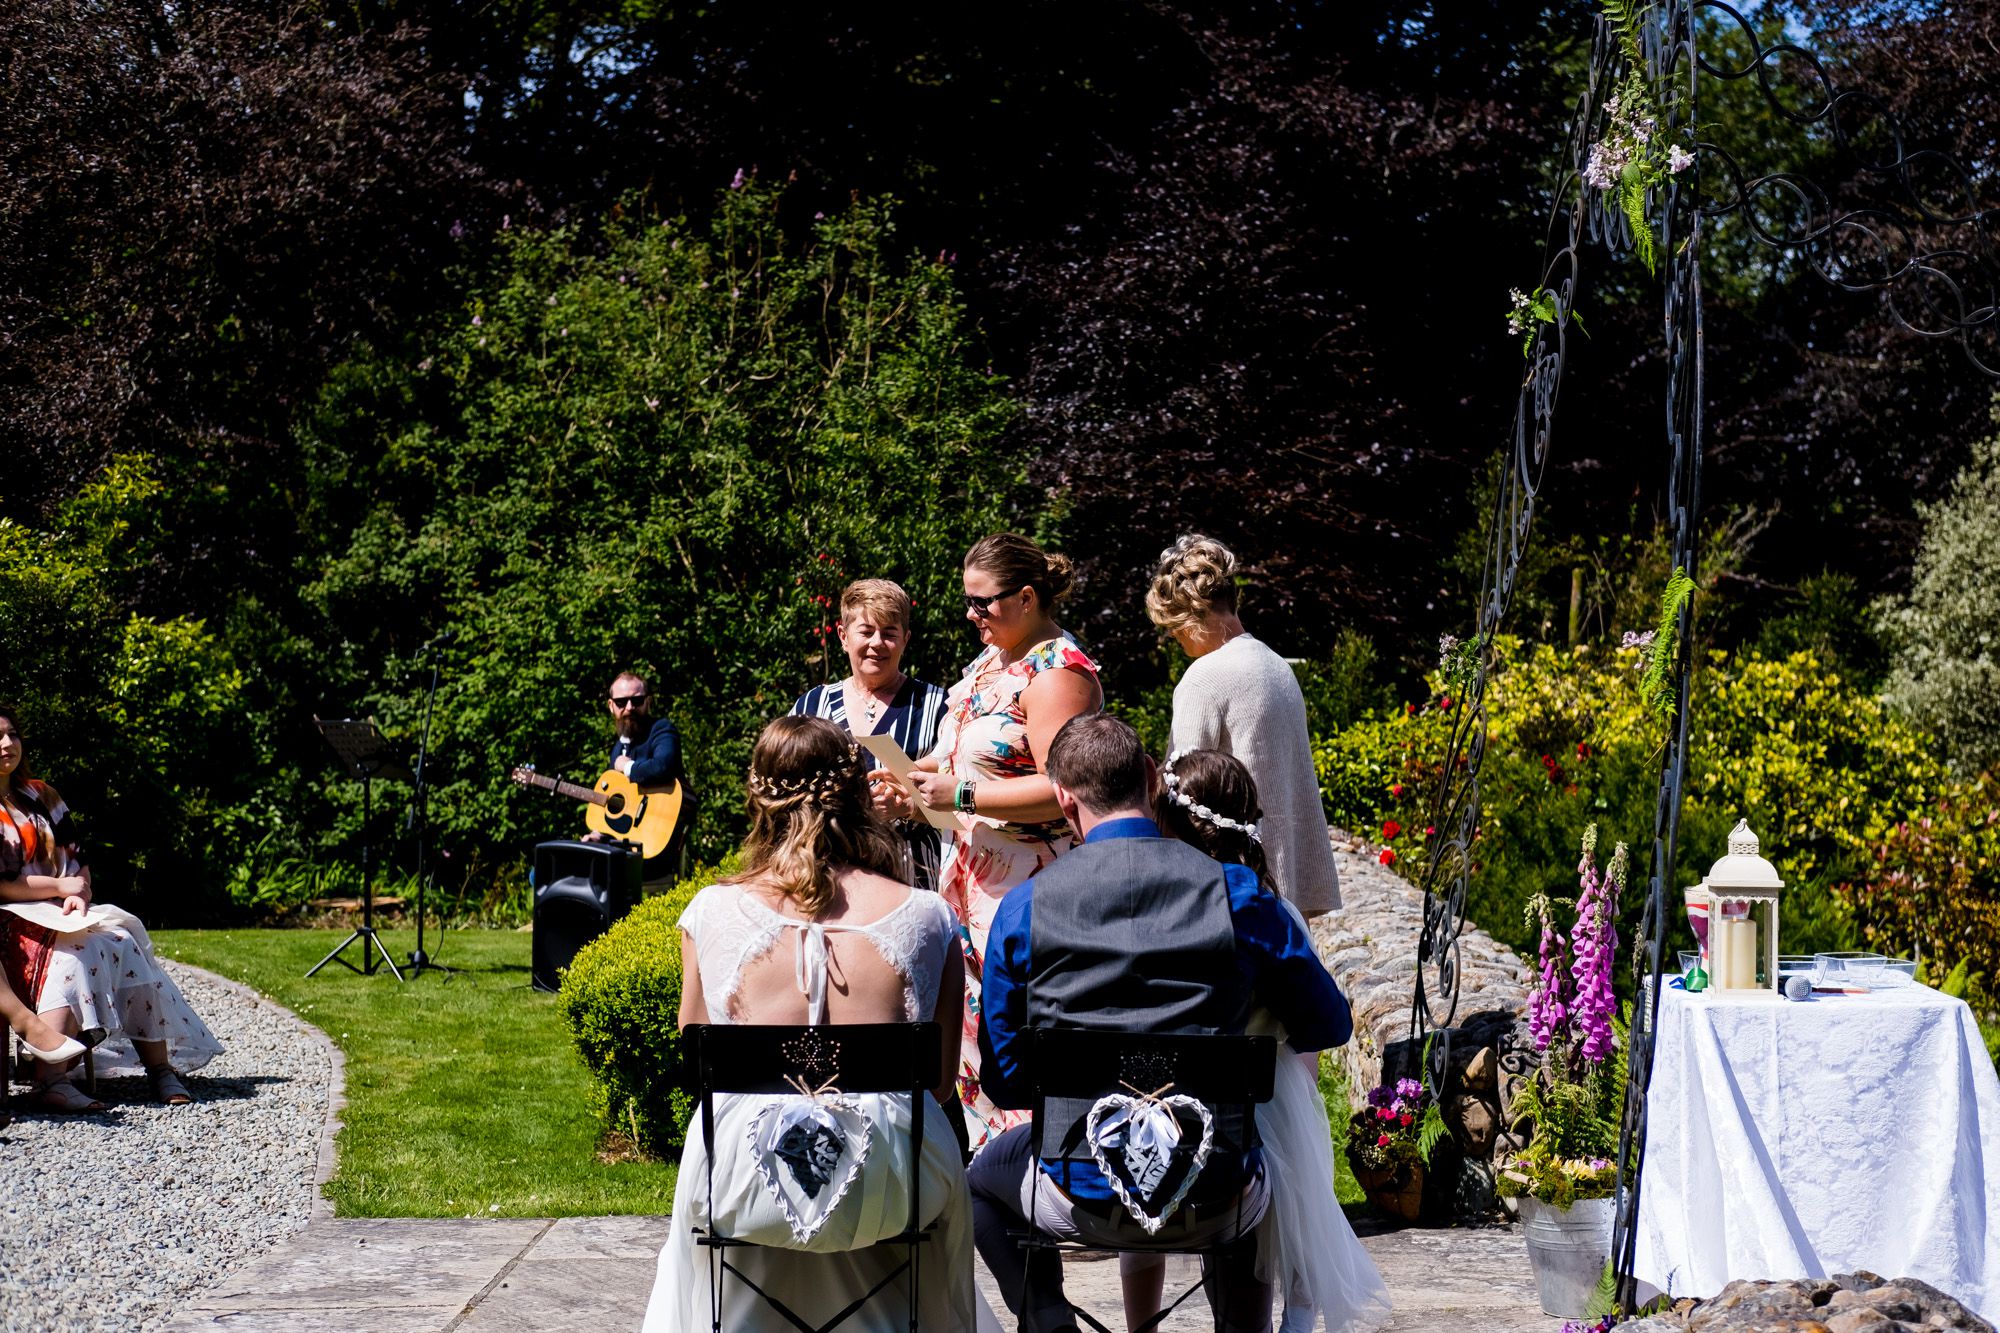 inish-beg-outdoor-wedding-ceremony-summer